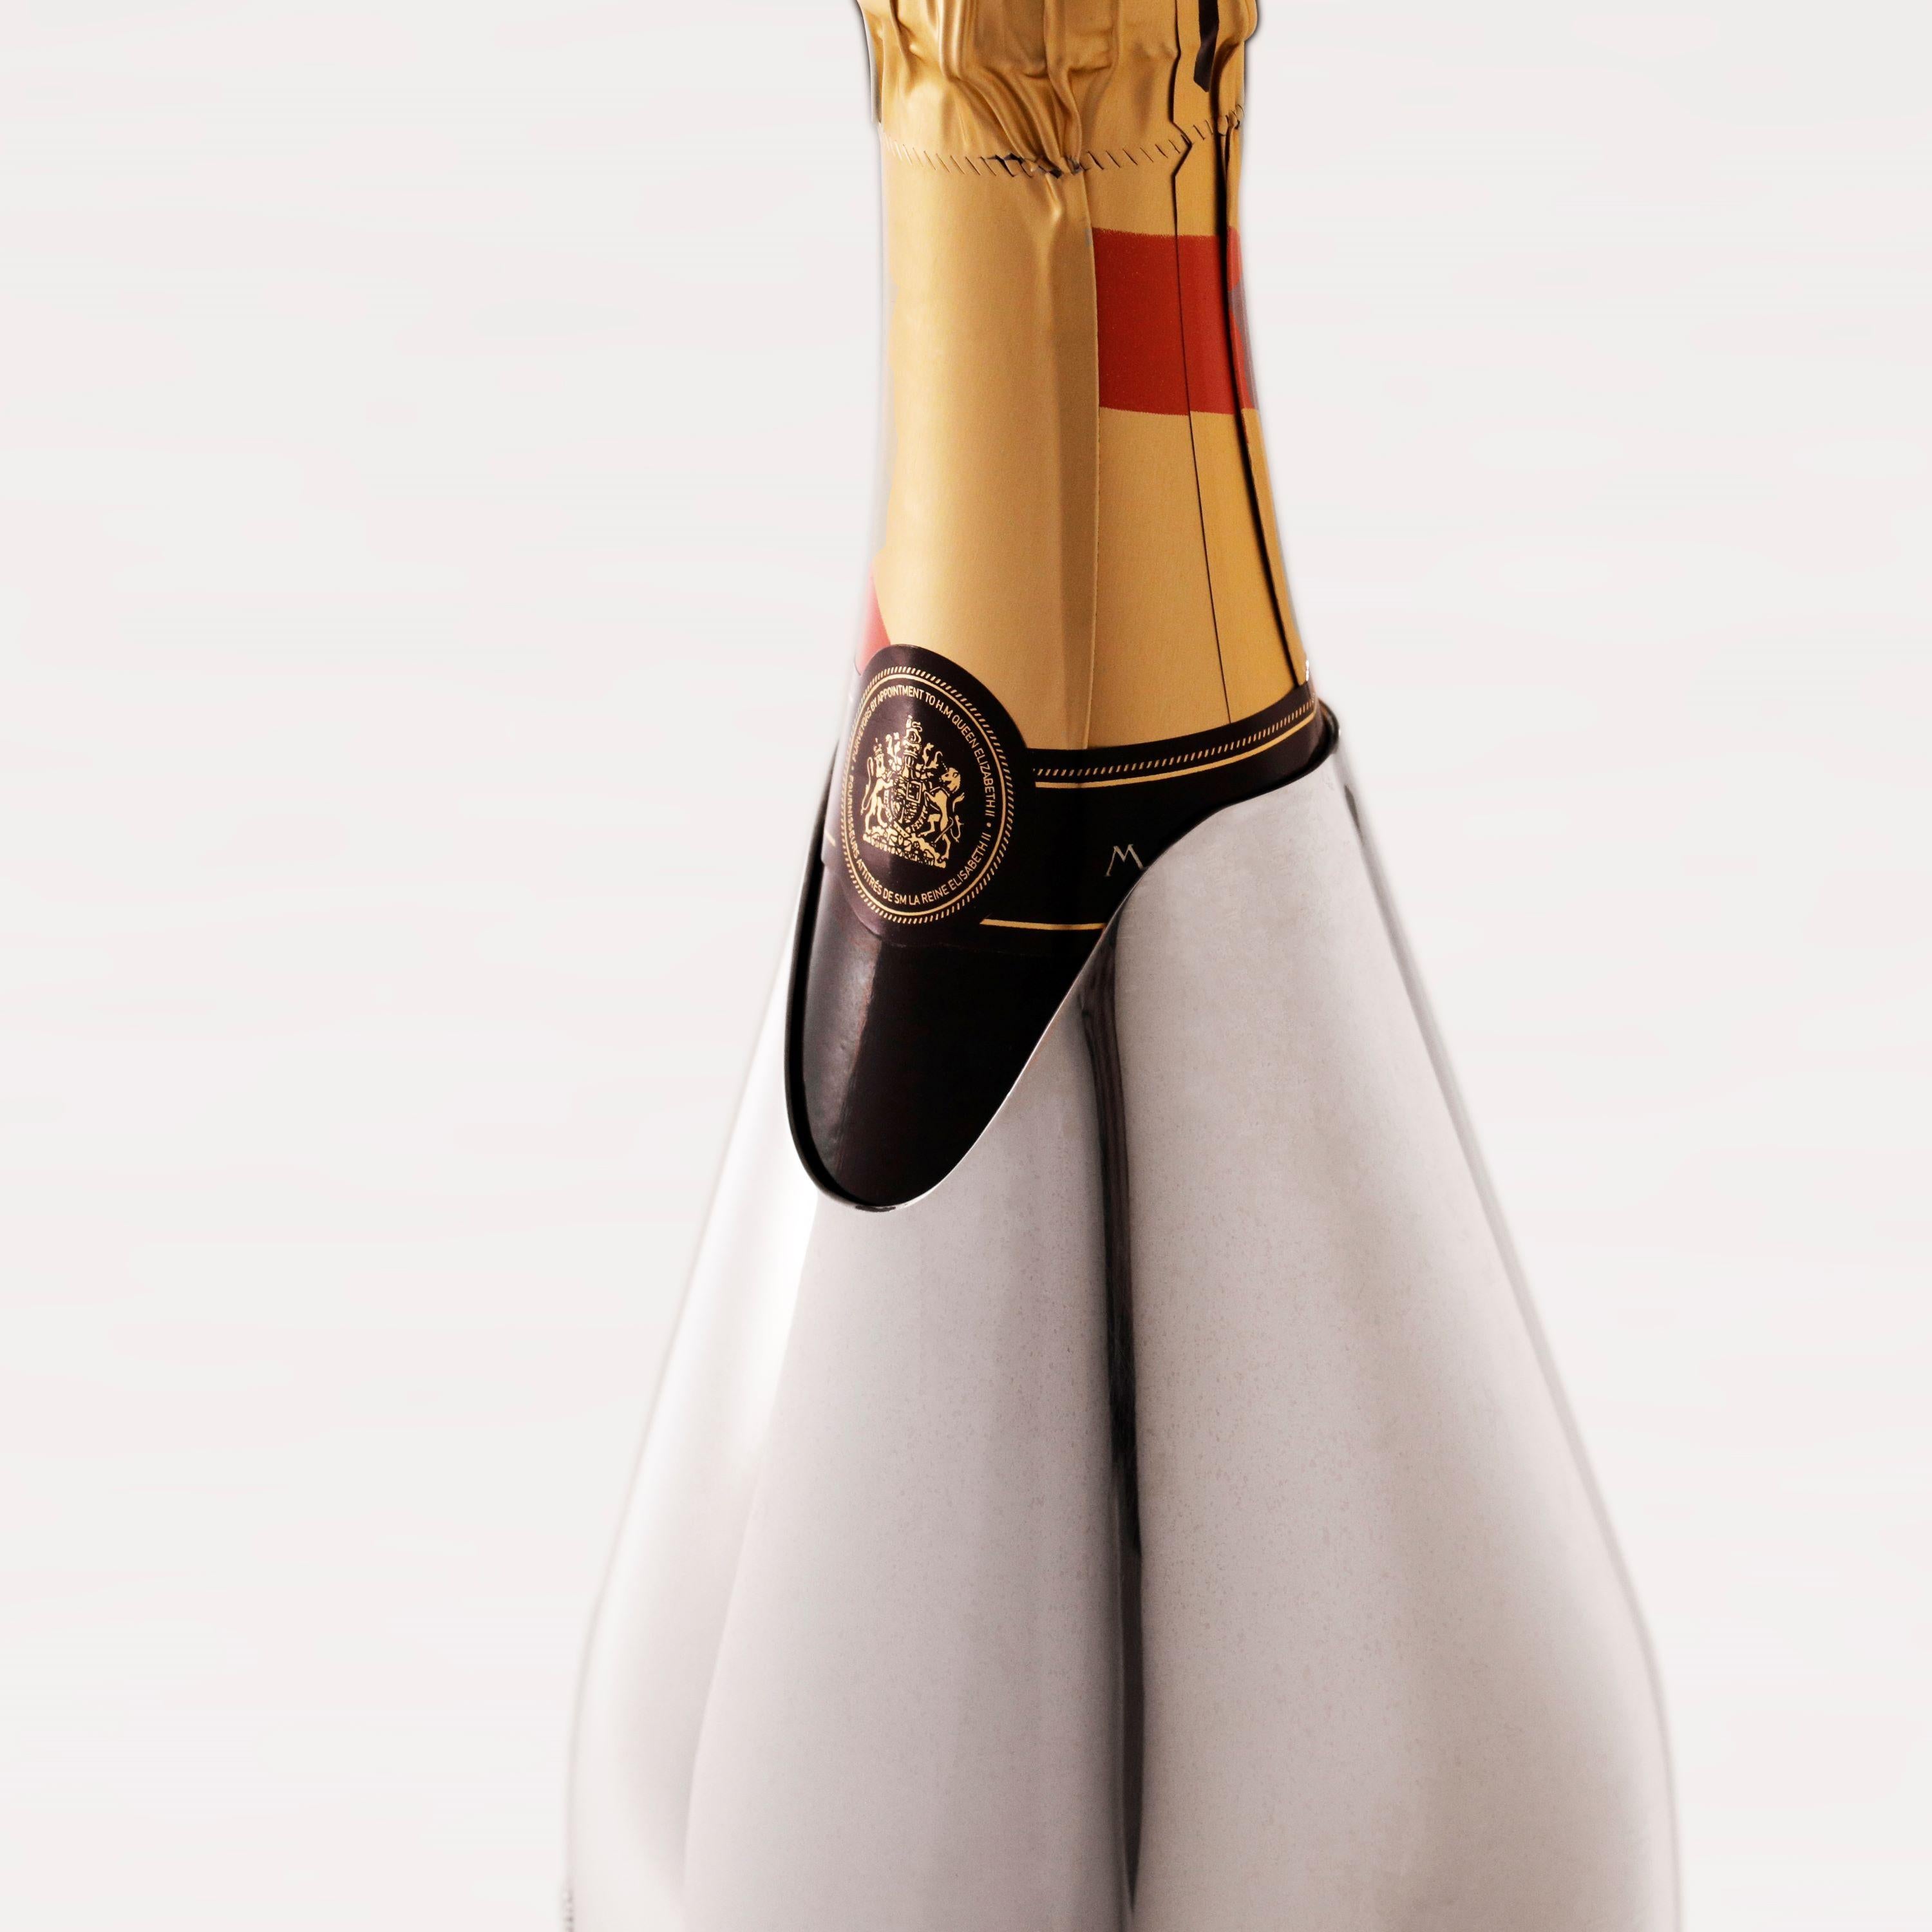 21st champagne bottle